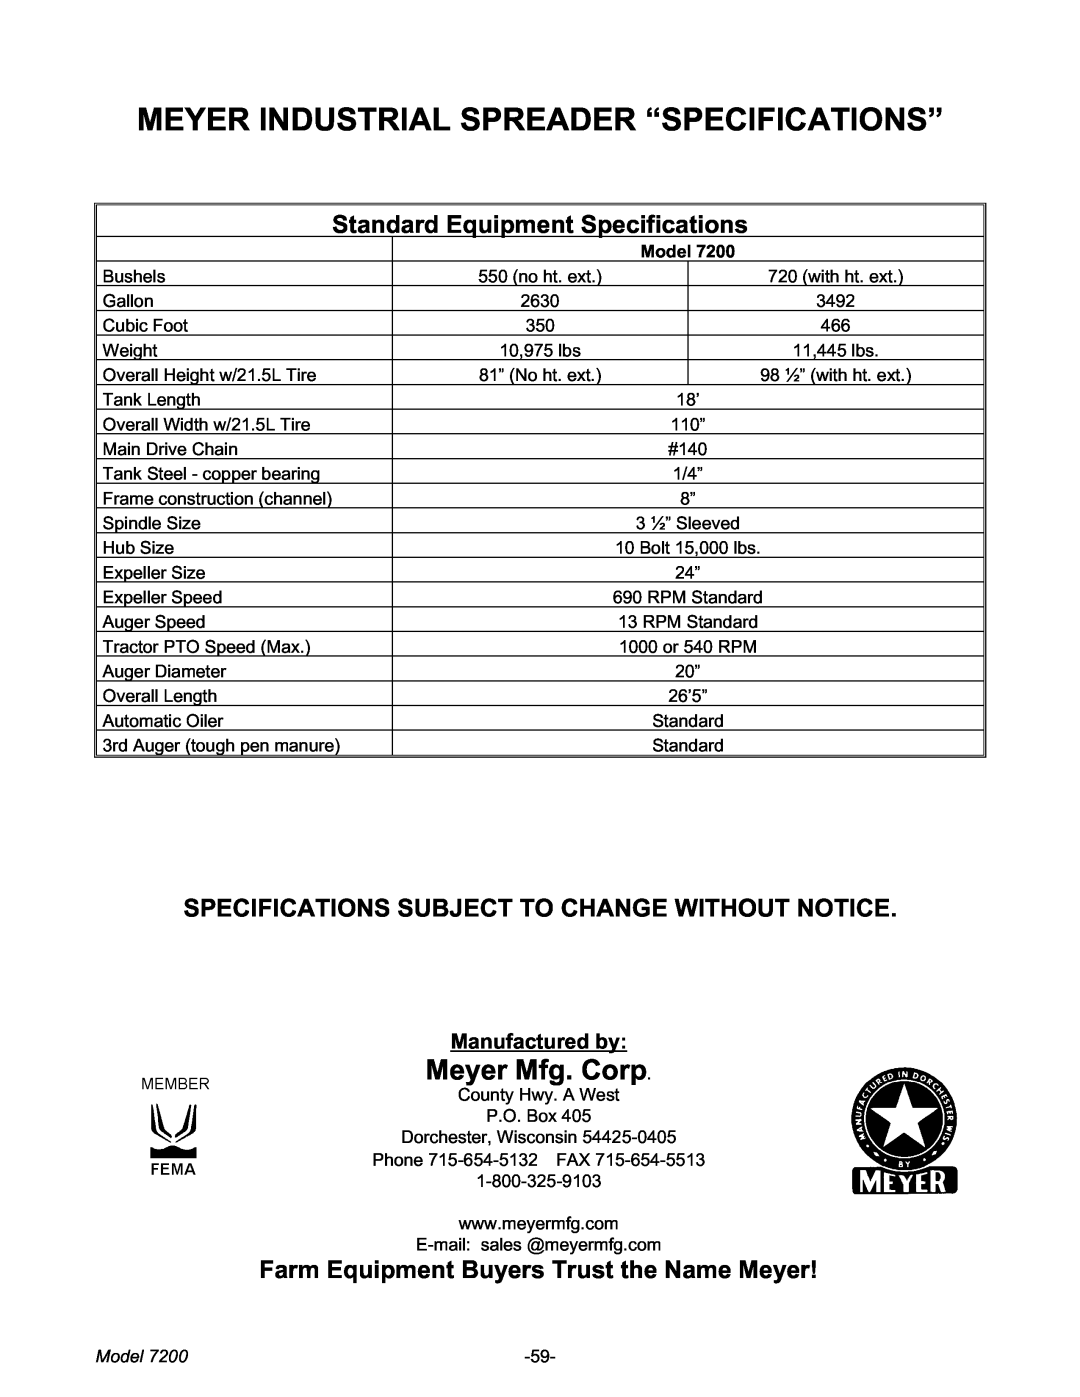 Meyer 7200 manual Meyer Industrial Spreader “Specifications”, Standard Equipment Specifications, Meyer Mfg. Corp, Model 